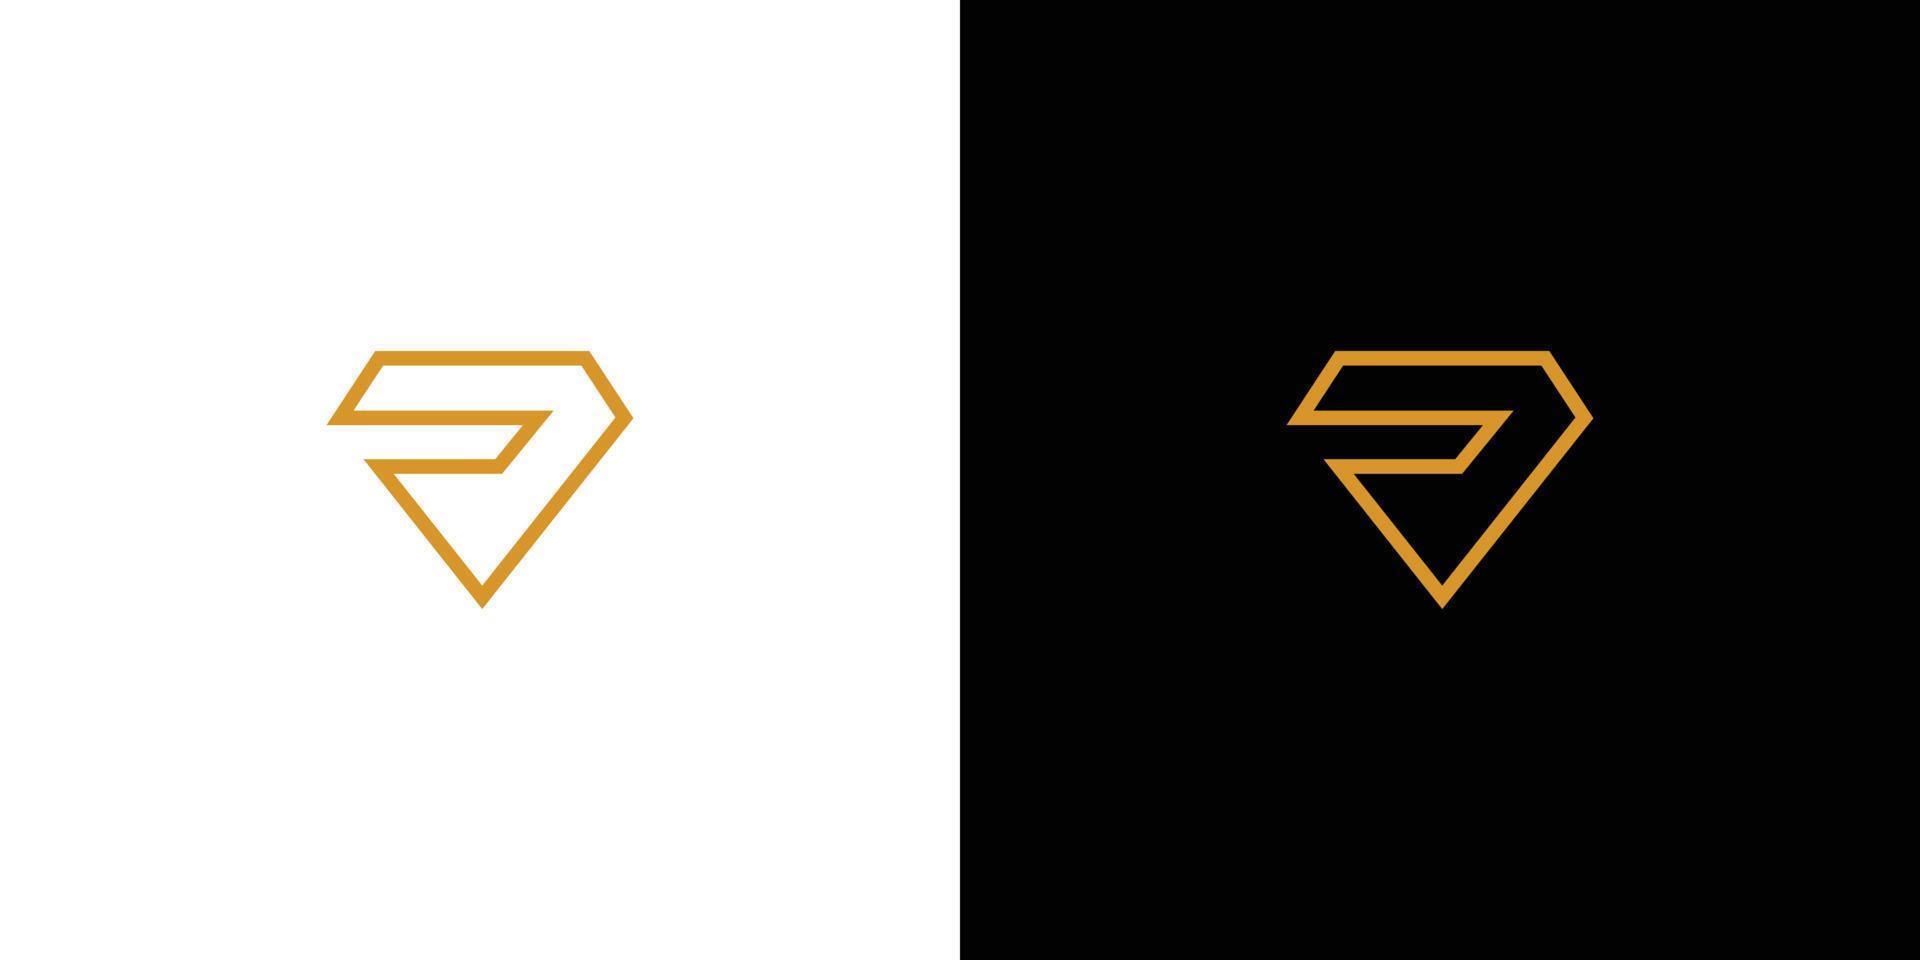 Simple and unique letter S initial diamond logo design vector